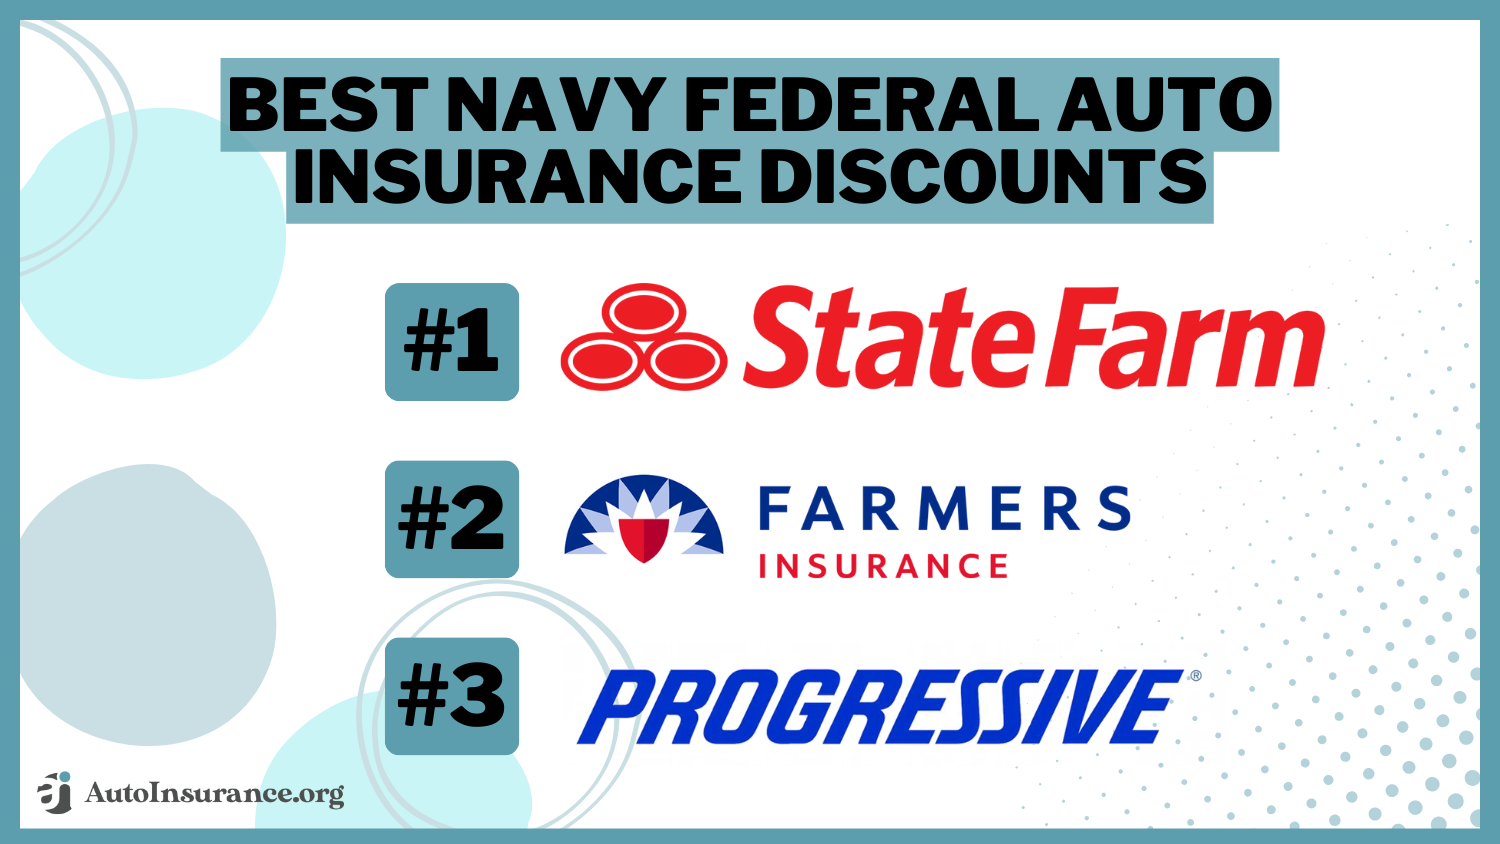 State Farm, Farmers, Progressive: best navy federal auto insurance discounts